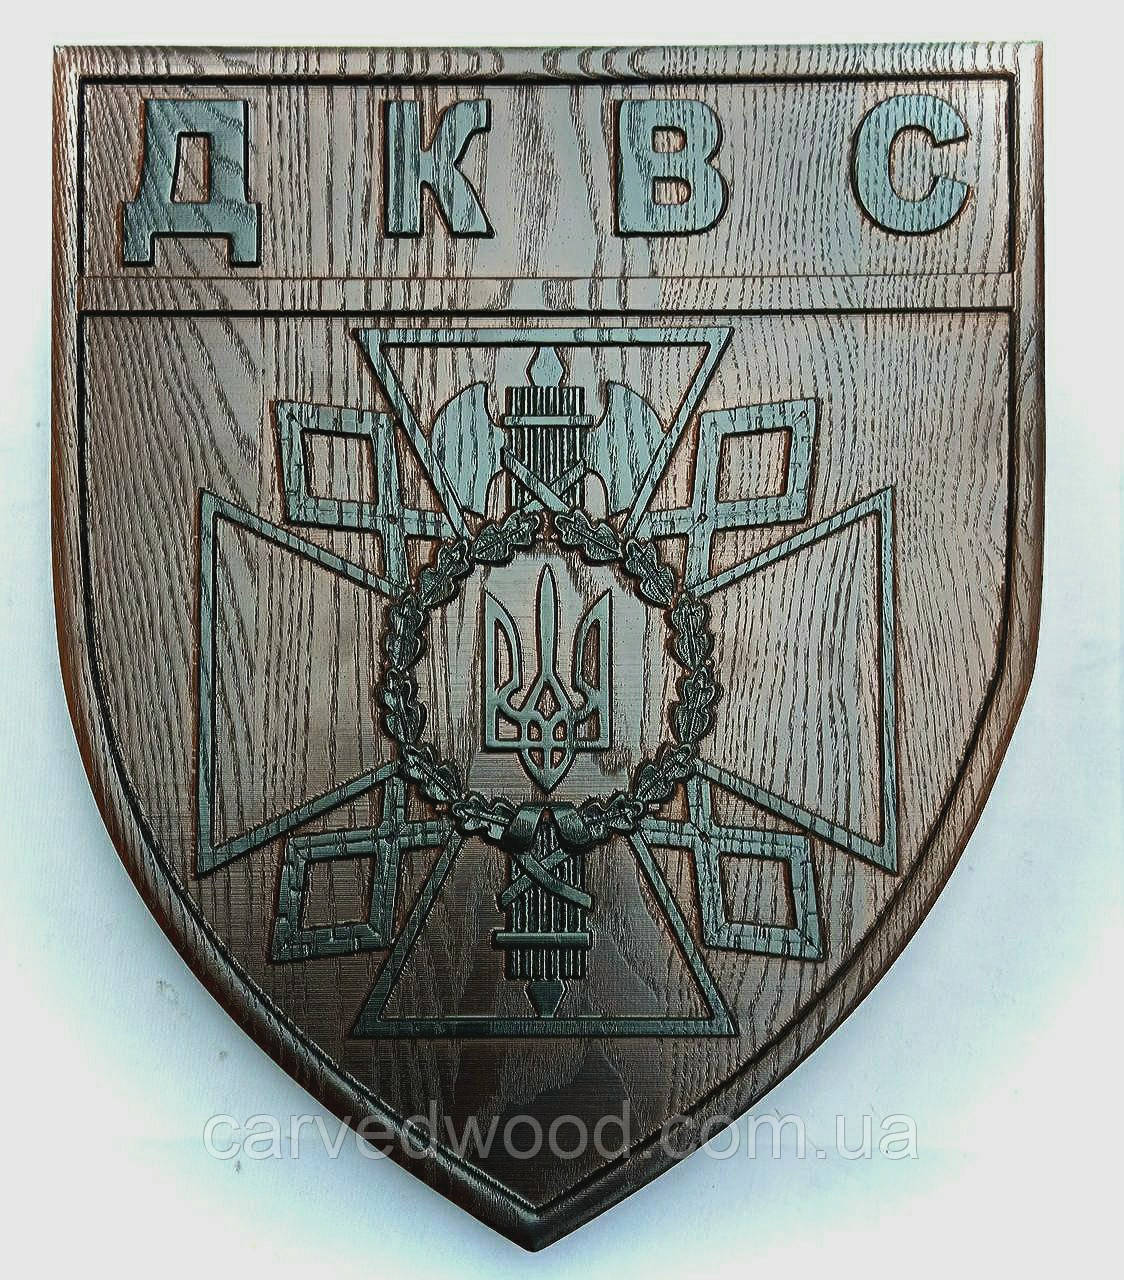 Різне панно картина з натурального дерева ясеня ЧПУ "Емблема Державної кримінально-виконавчої служби України"